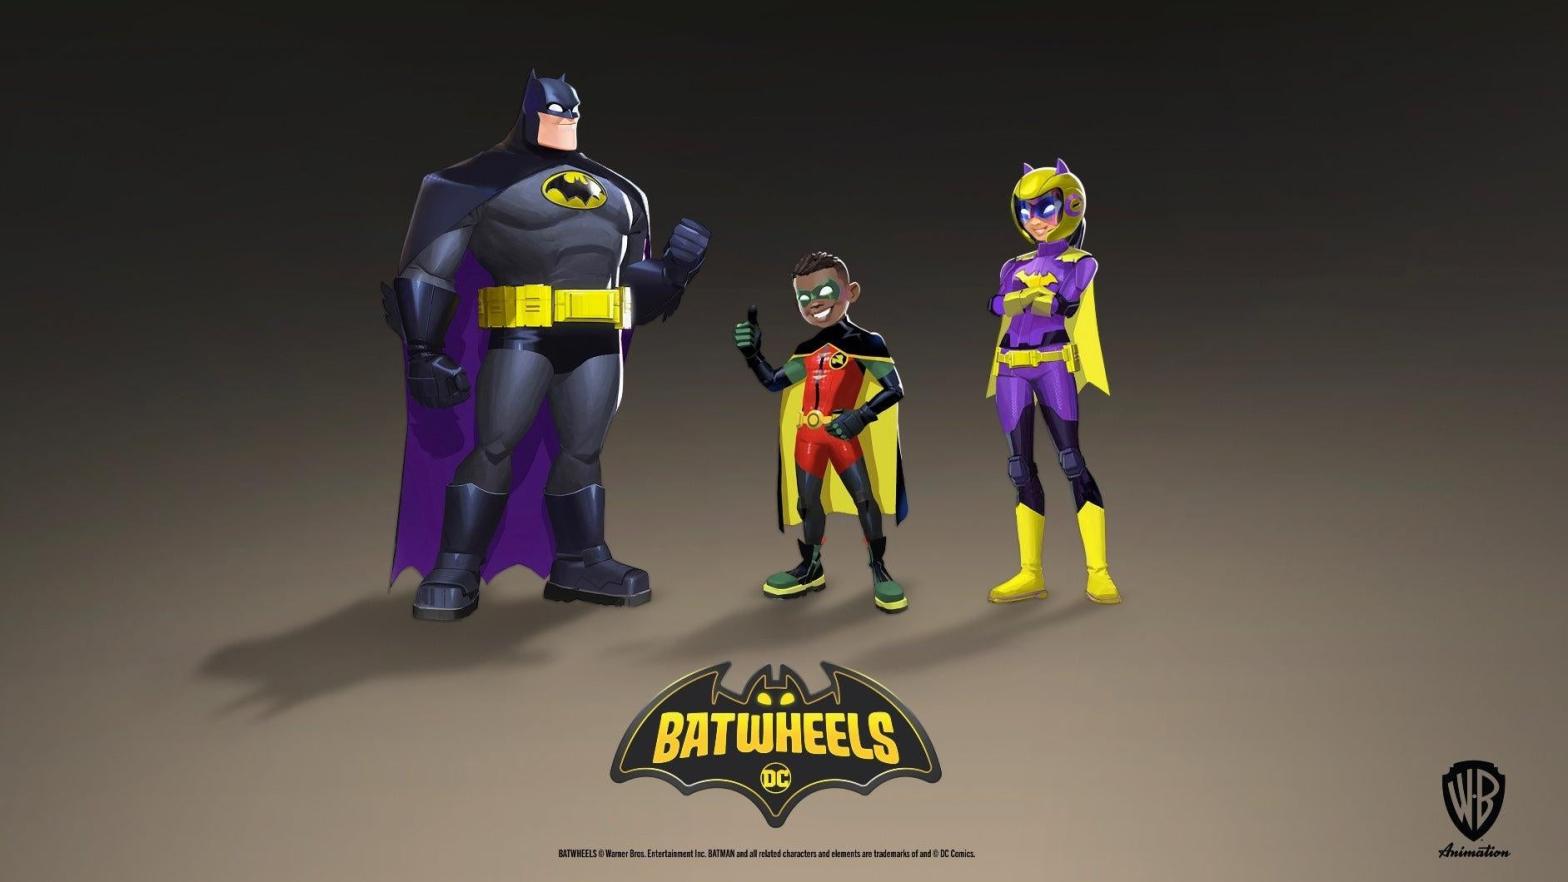 The new Batfamily in the show Batwheels. (Image: Warner Bros.)